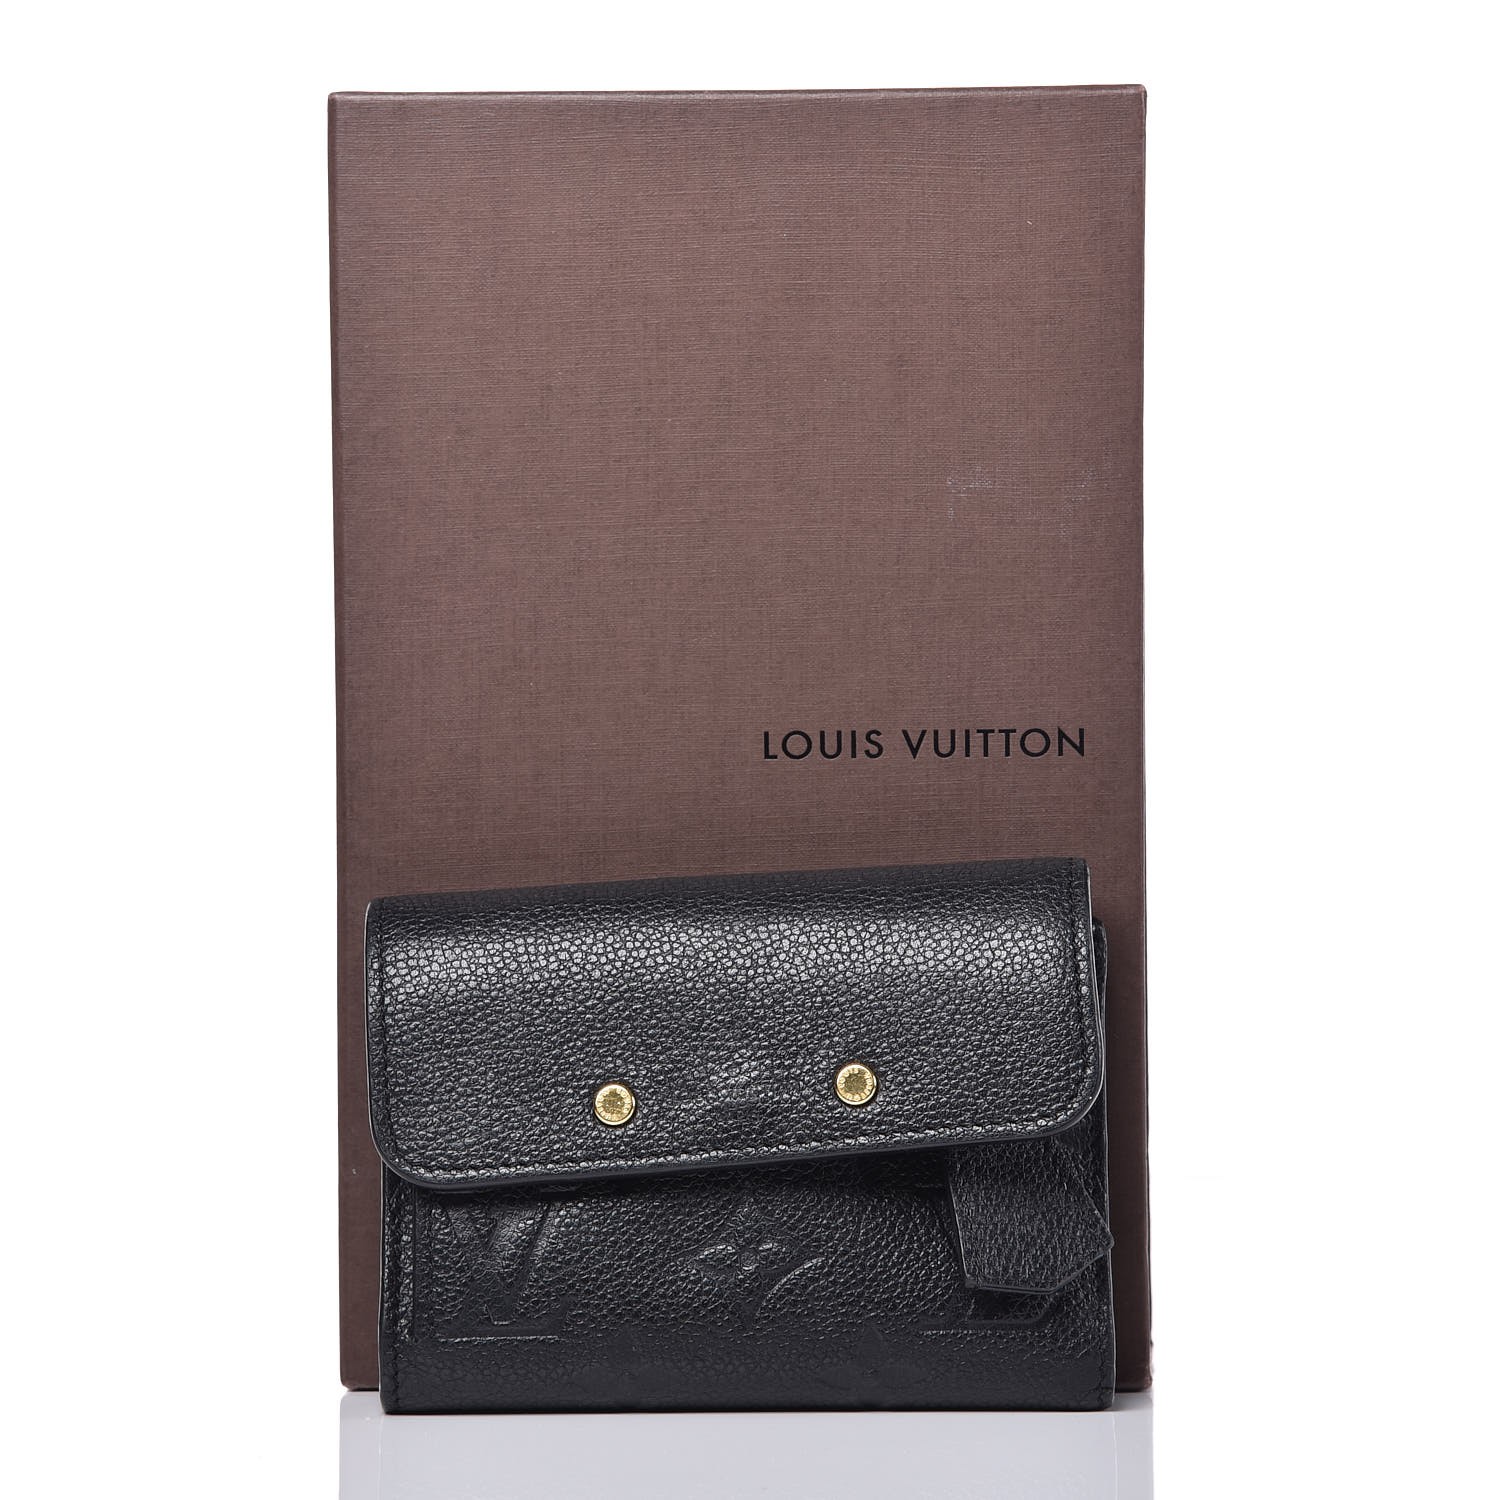 LOUIS VUITTON Empreinte Pont-Neuf Compact Wallet Black 311522